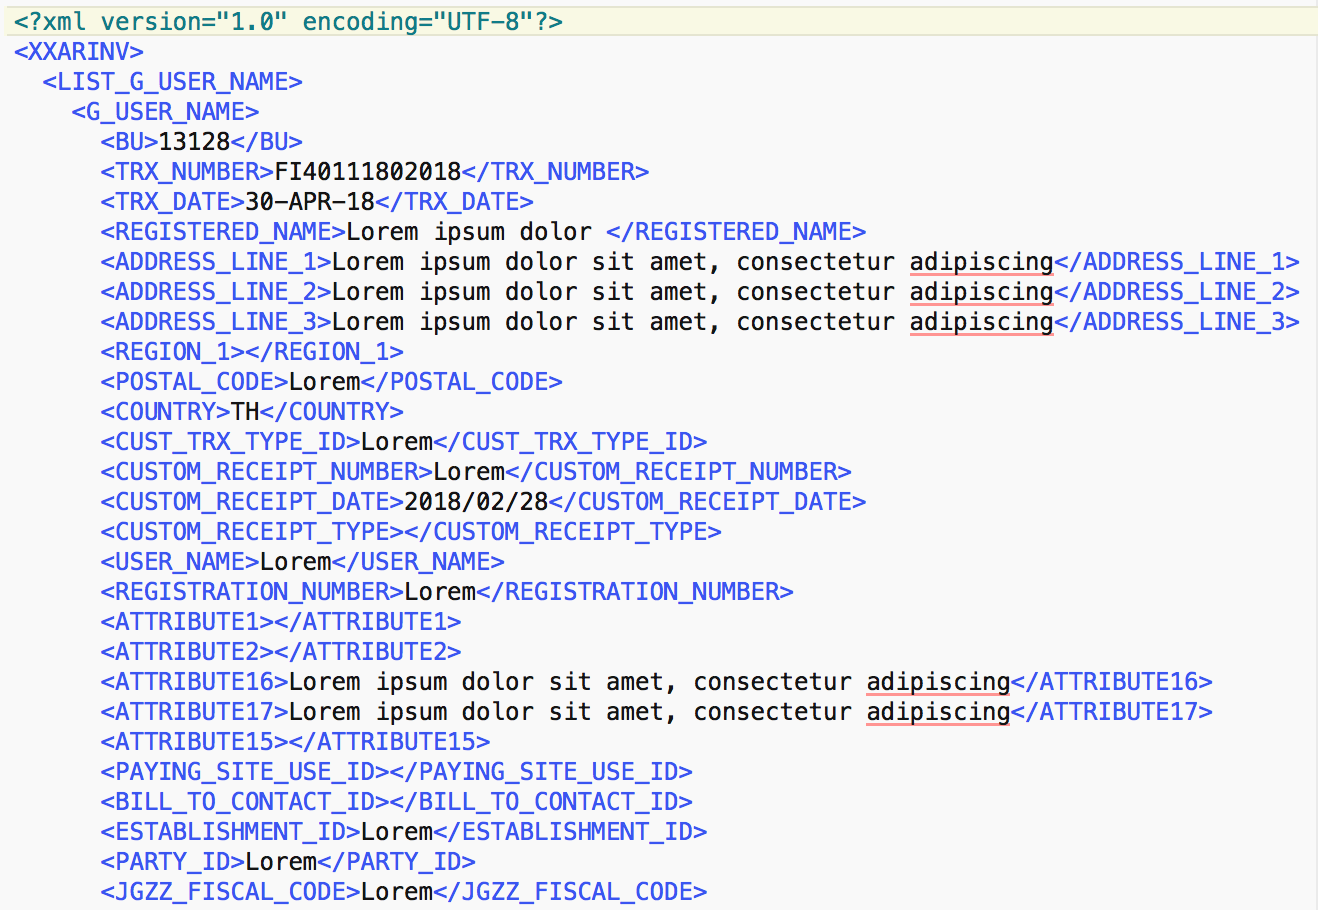 etax XML_example